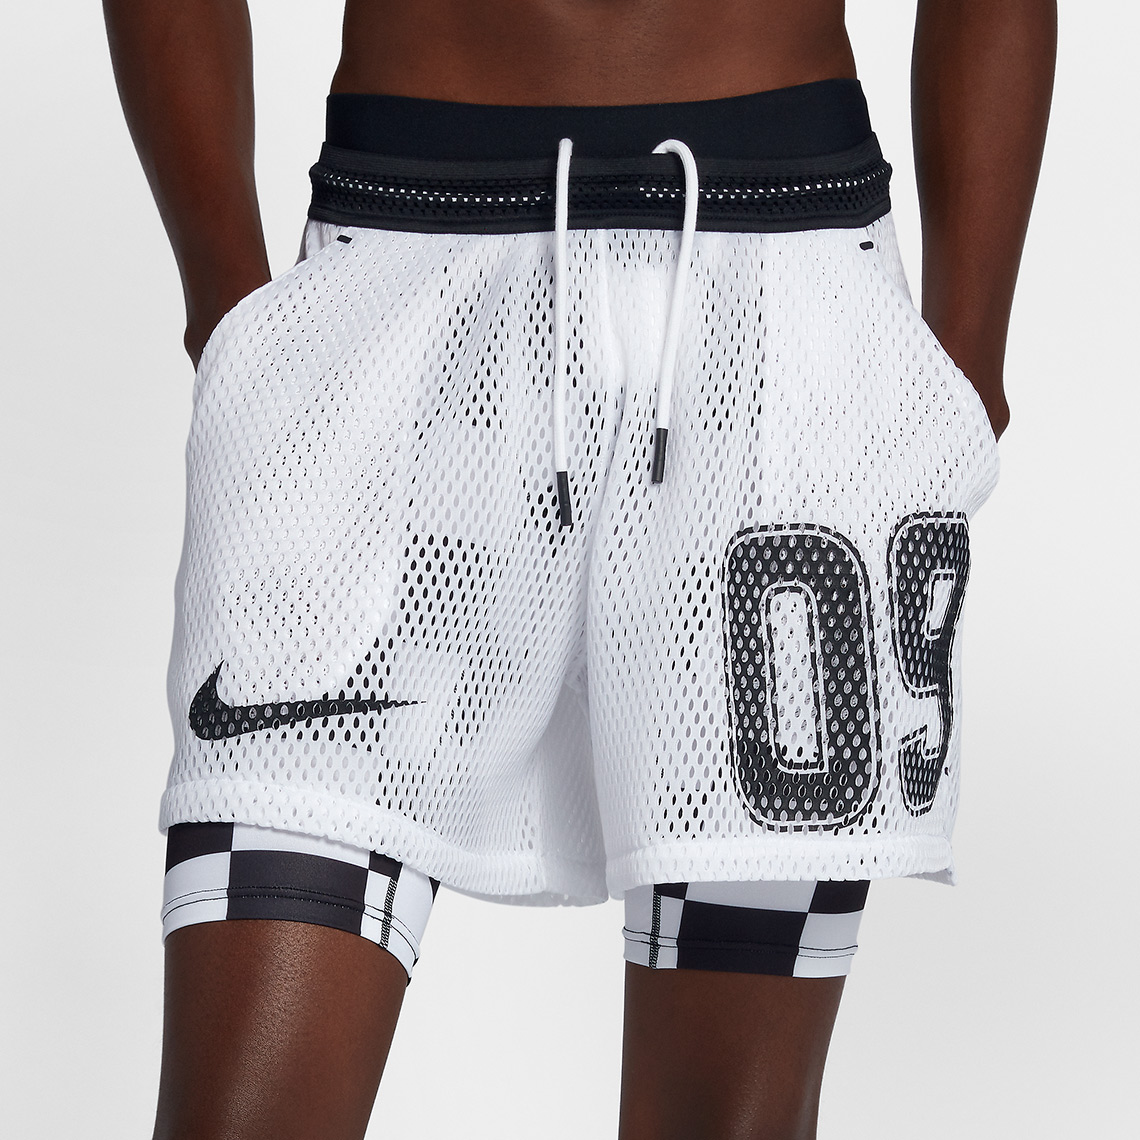 OFF WHITE Nike Football Apparel Release Info | SneakerNews.com